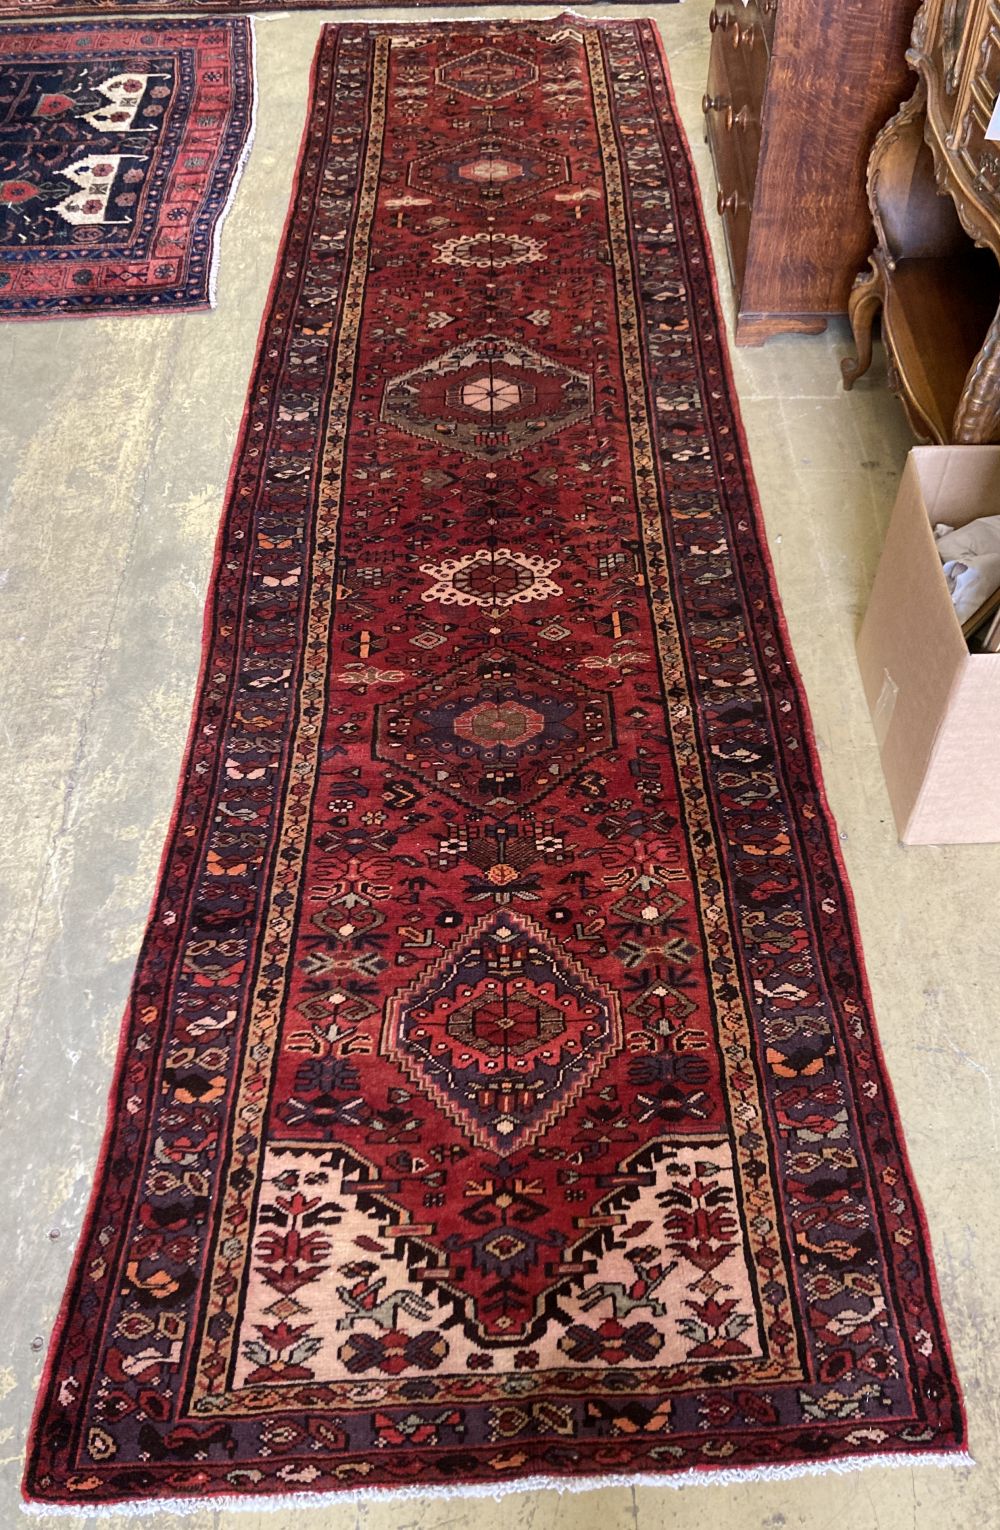 A Karajeh carpet 387 x 100cm